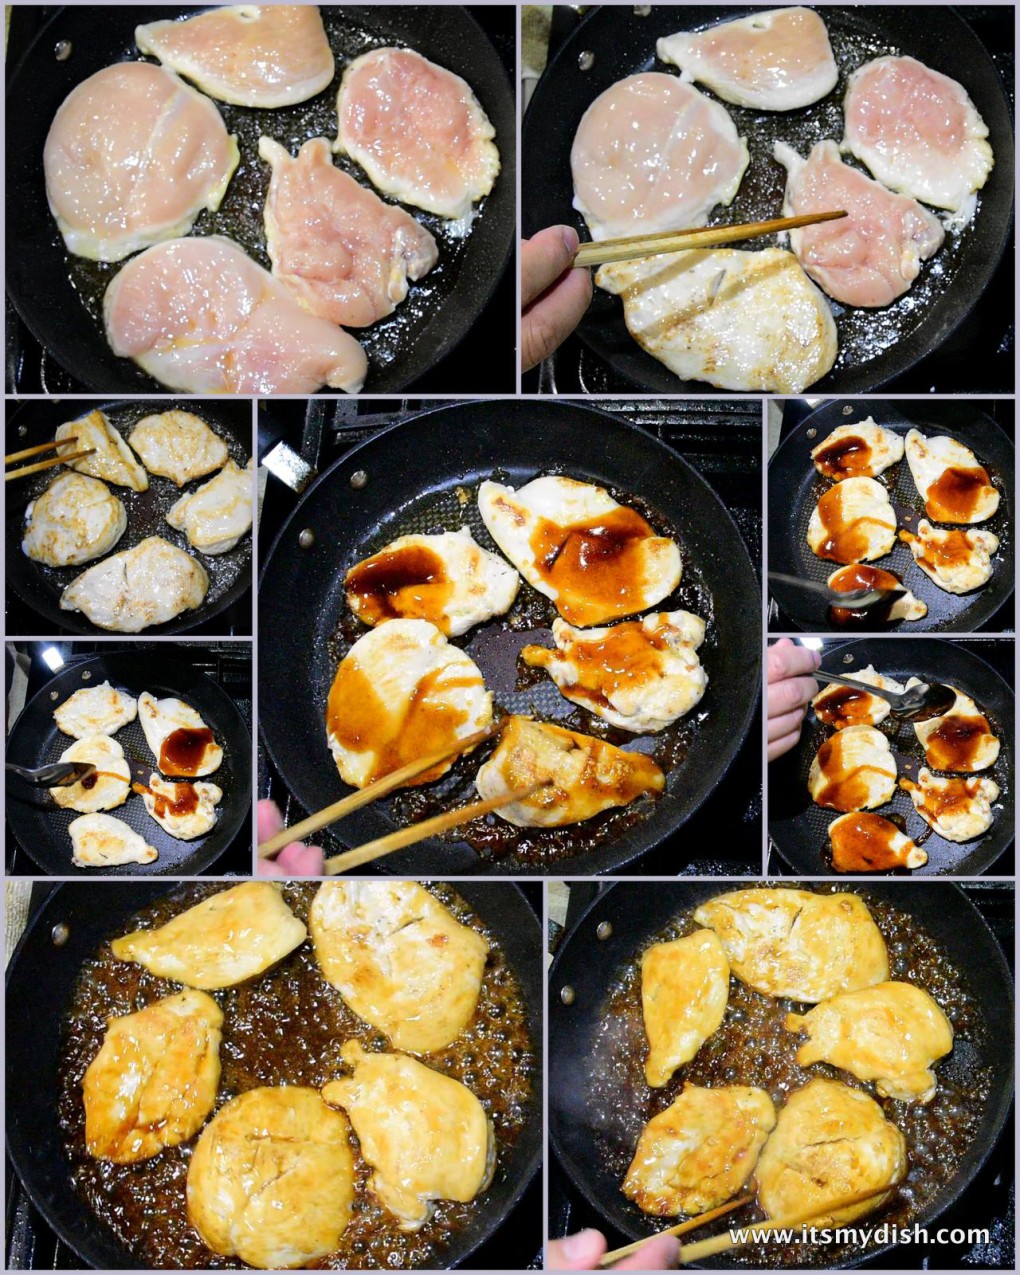 teriyaki chicken - process